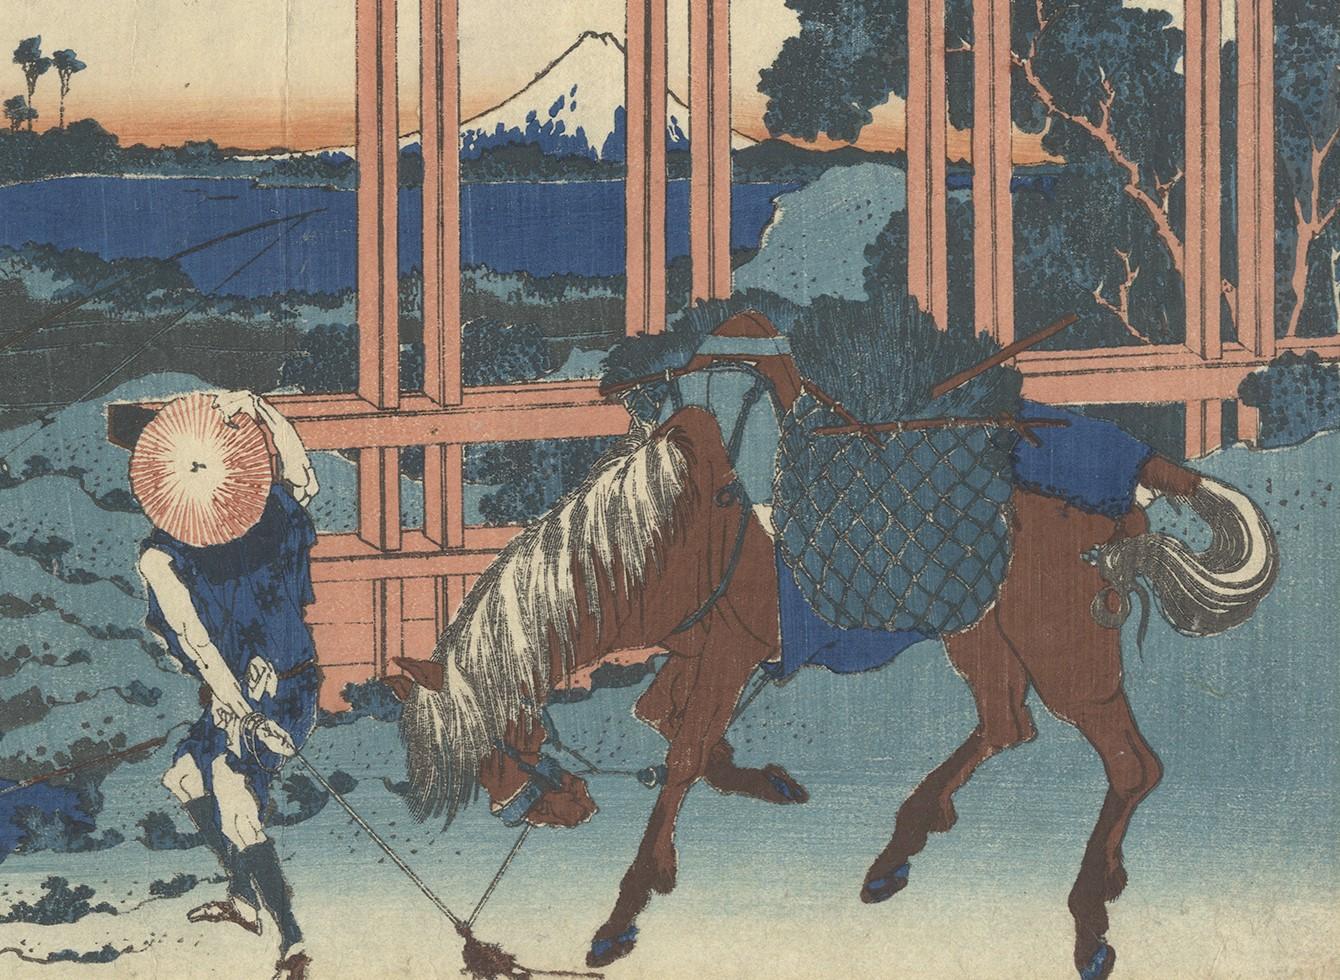 hokusai woodblock prints